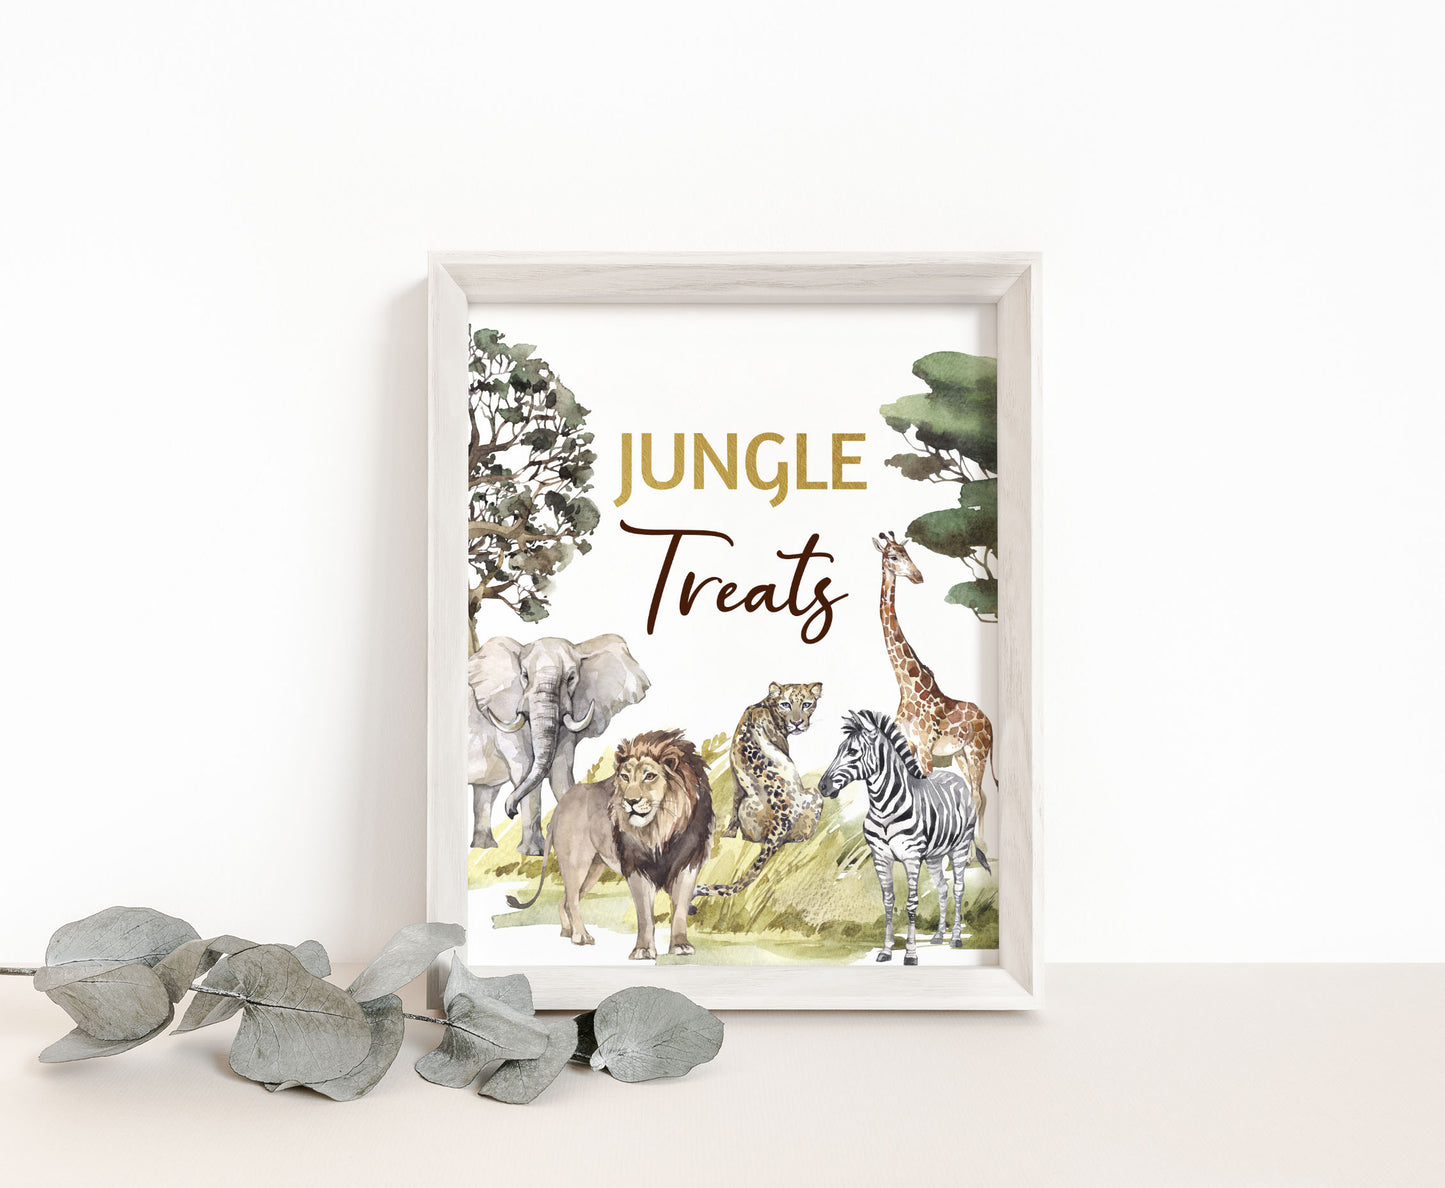 Safari Jungle Treats table sign | Jungle Themed Party Table Decorations - 35I